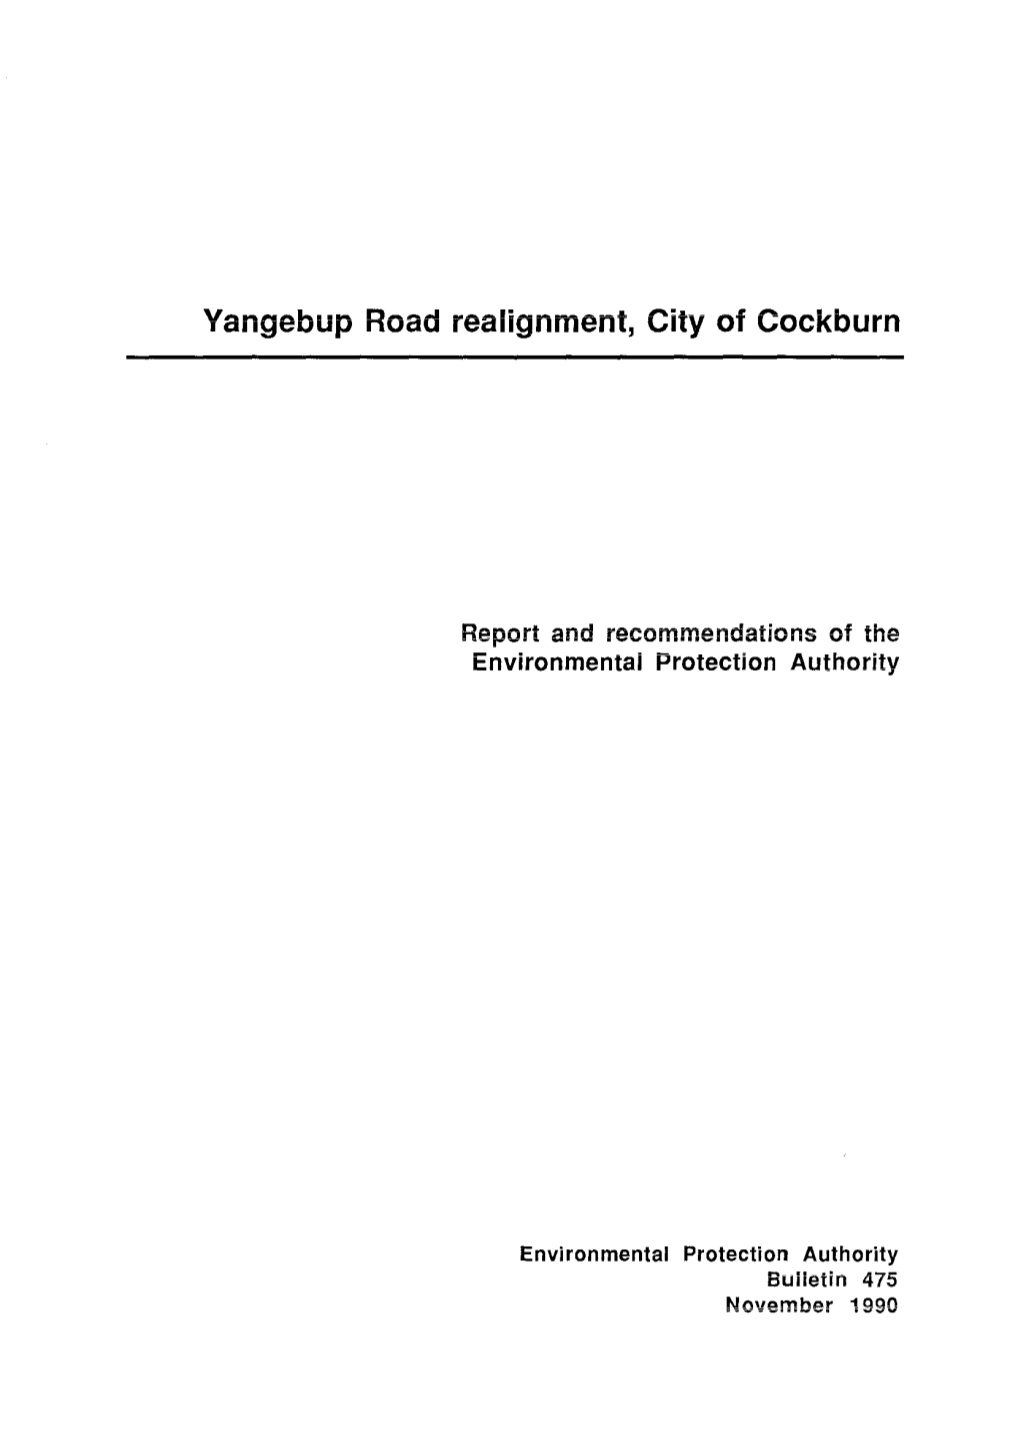 Yangebup Road Realignment, City of Cockburn